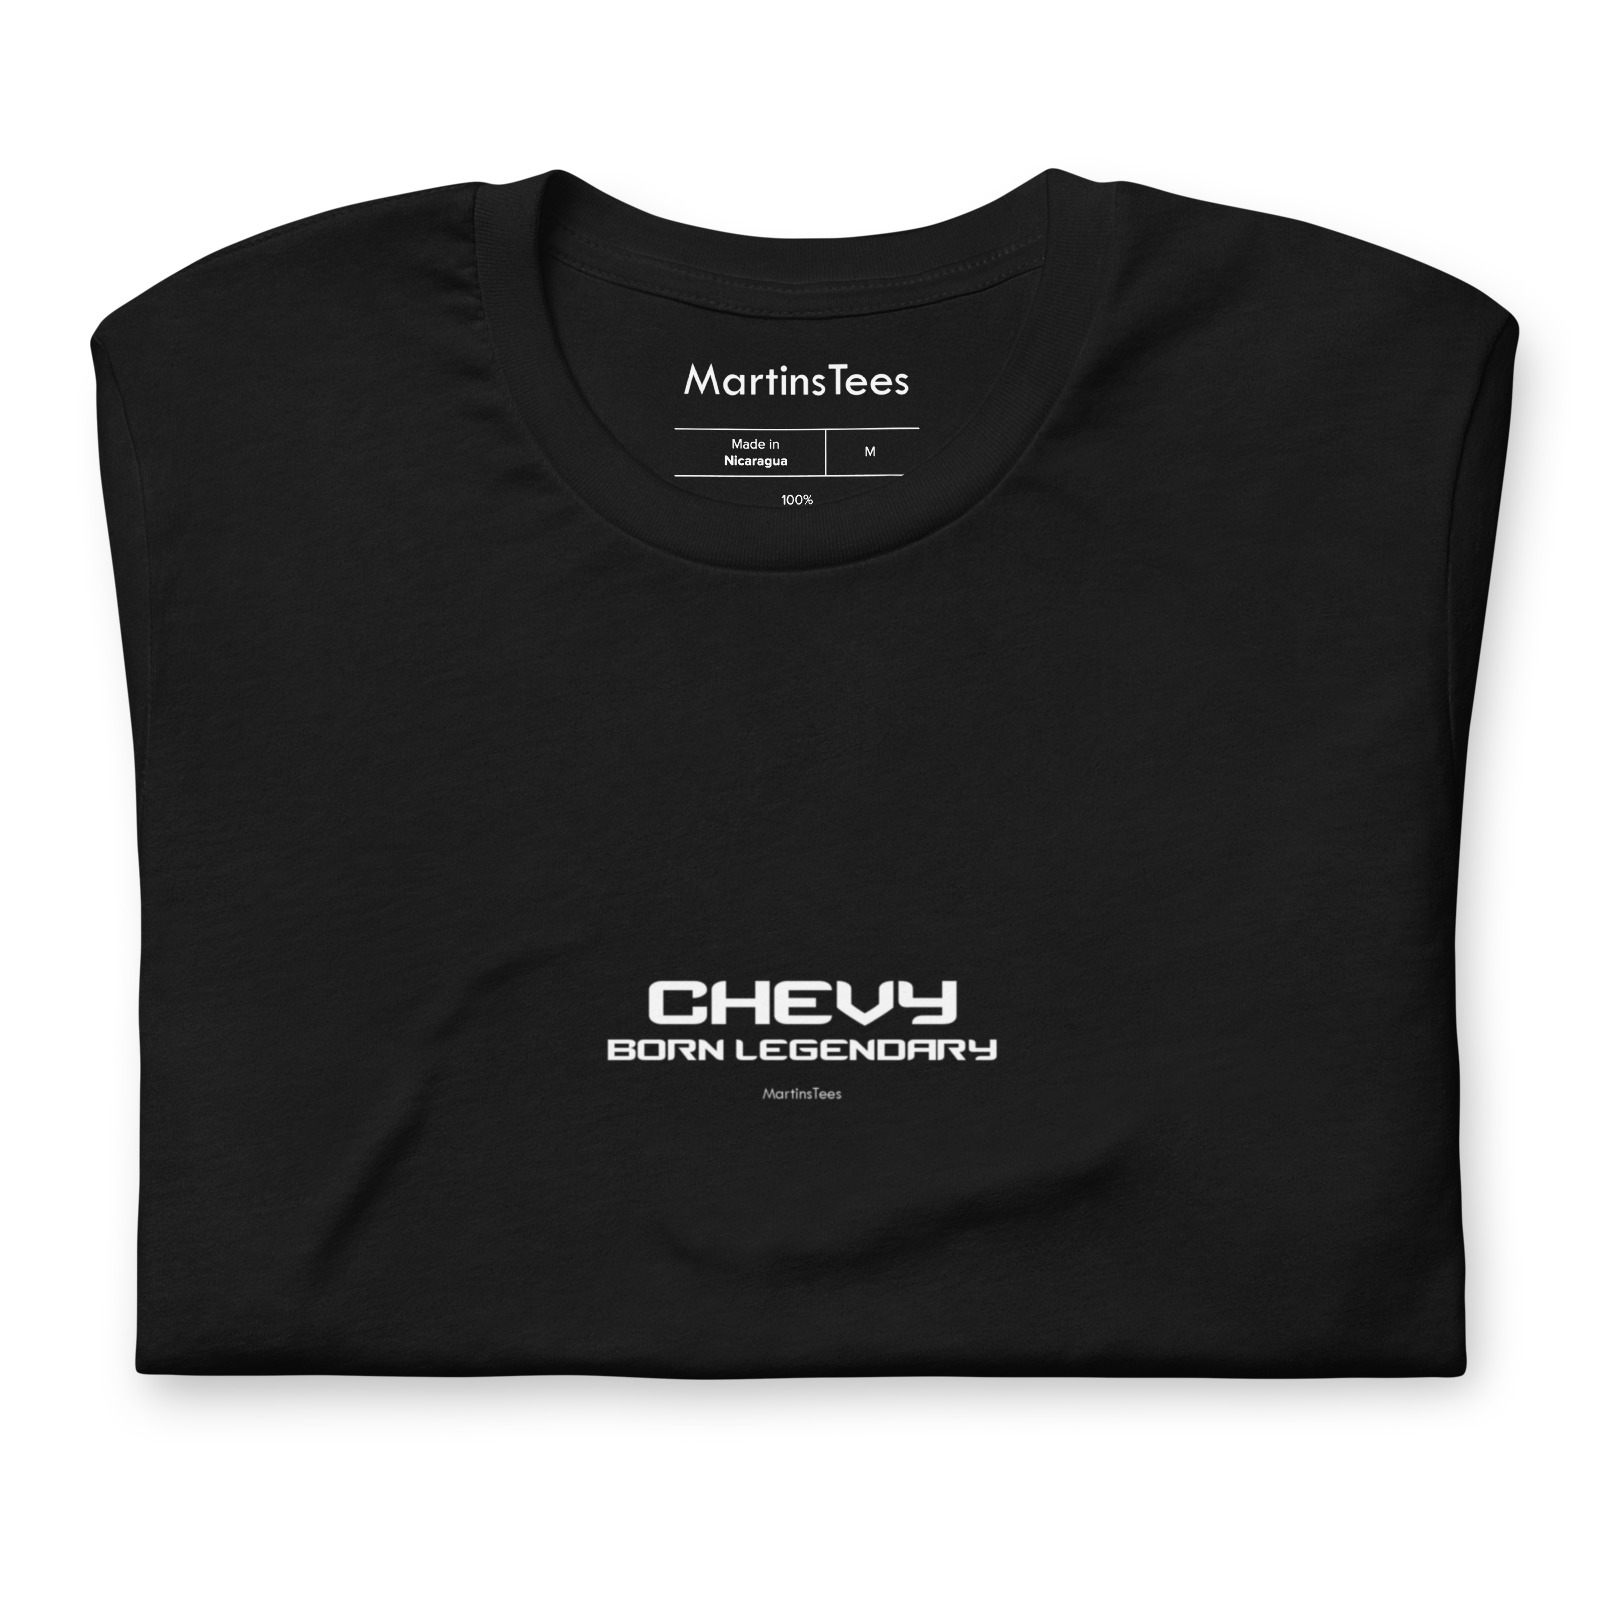 T-shirt: CHEVY - BORN LEGENDARY